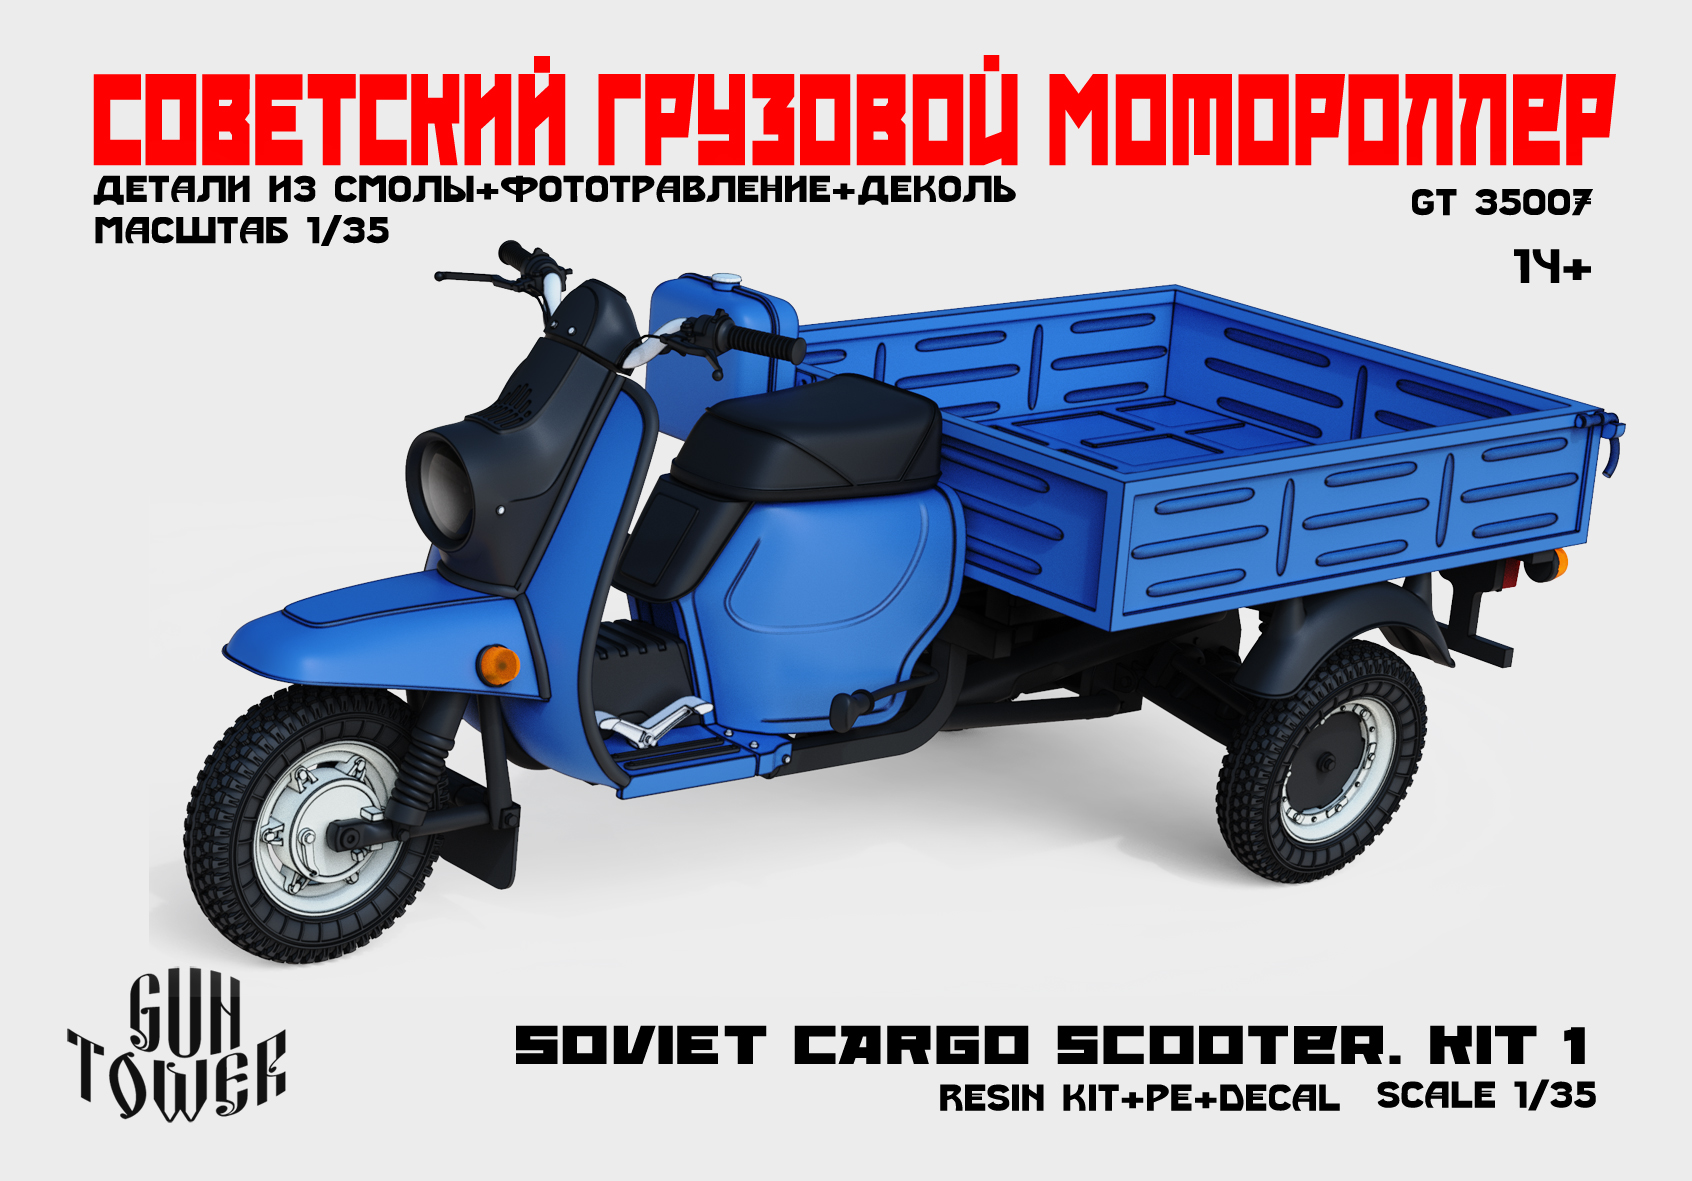 Soviet cargo scooter.Kit 1